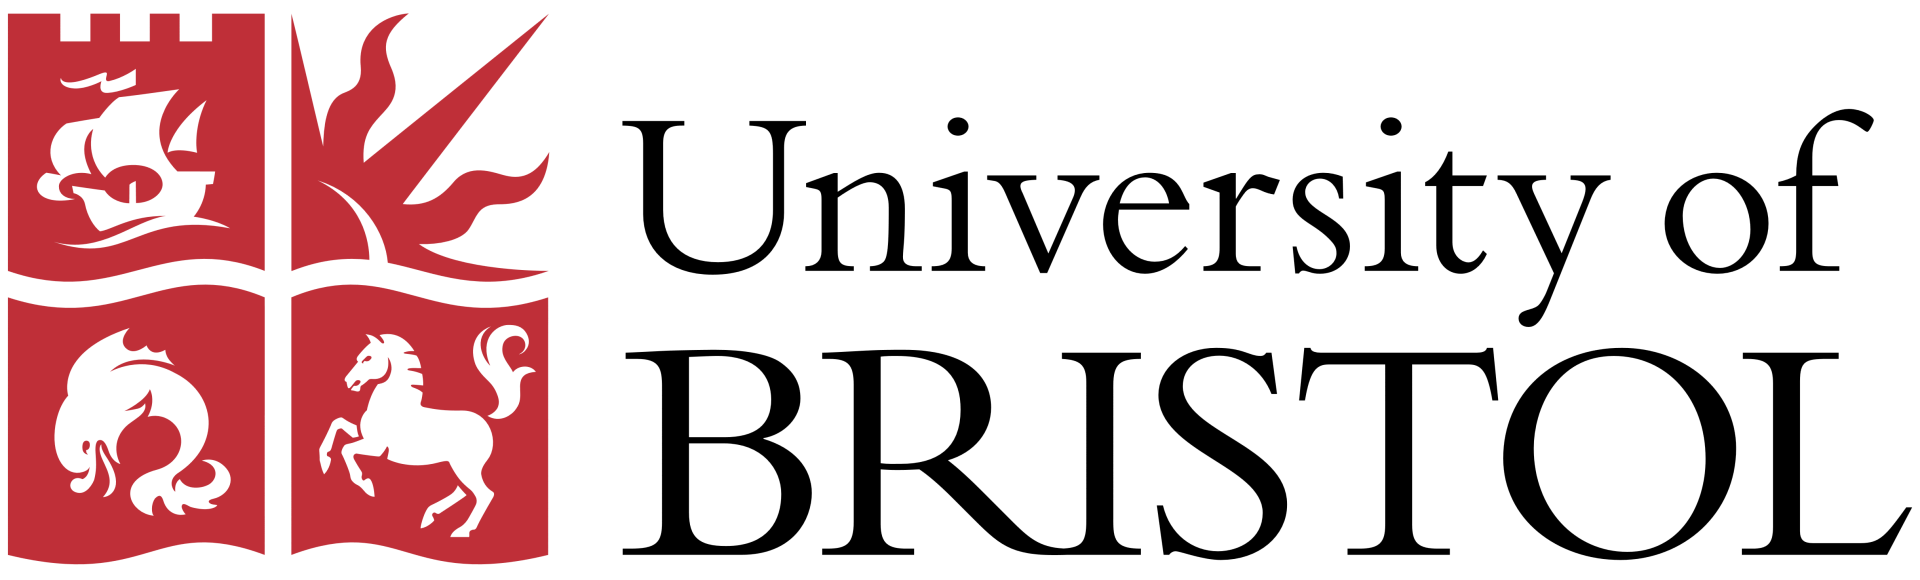 Custom Seating for University of Bristol